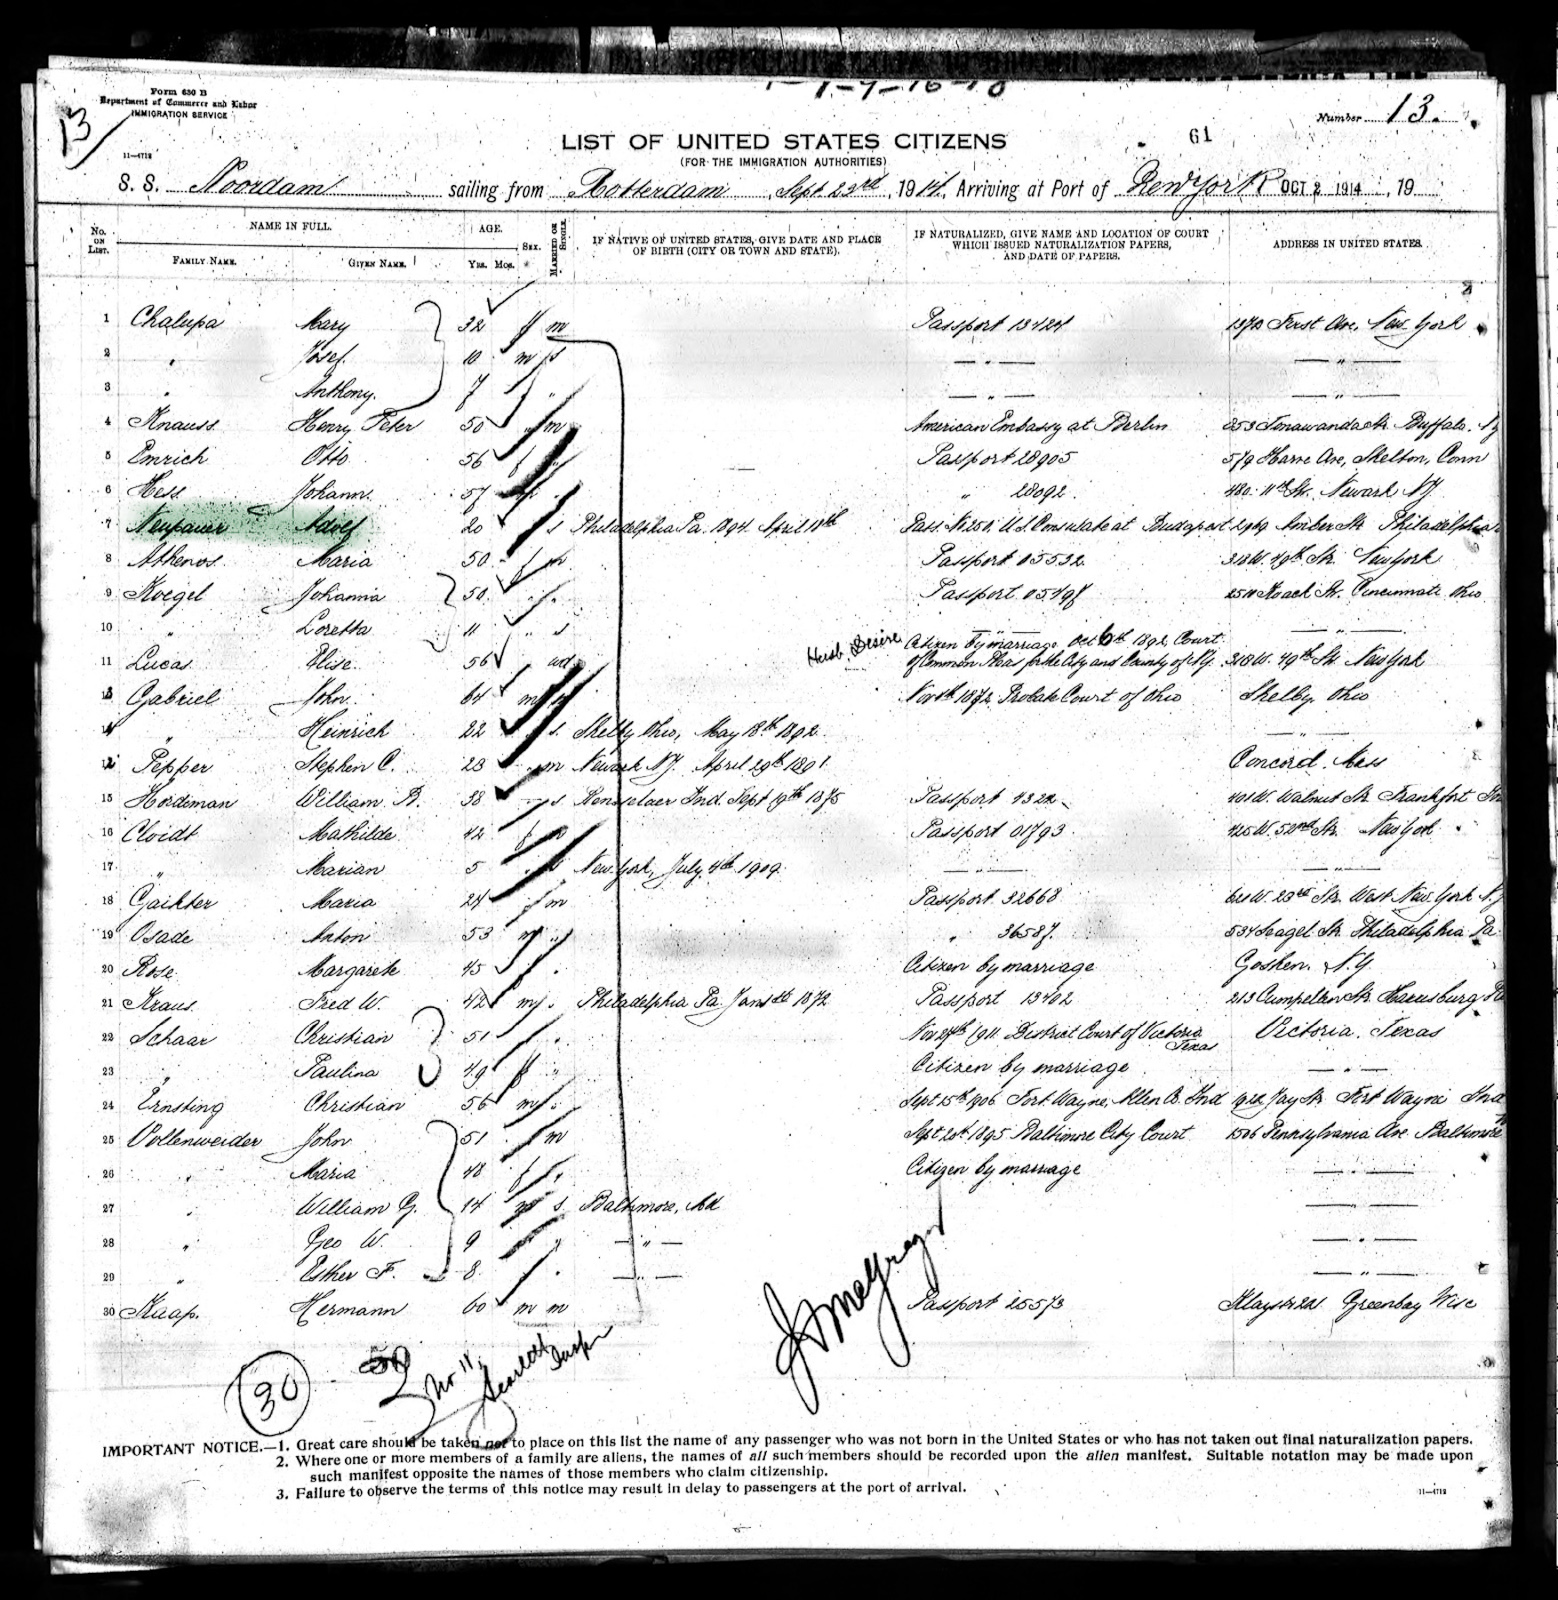 Arrival - Adolf Neupauer 1914 - New York Passenger Lists, 1820-1957